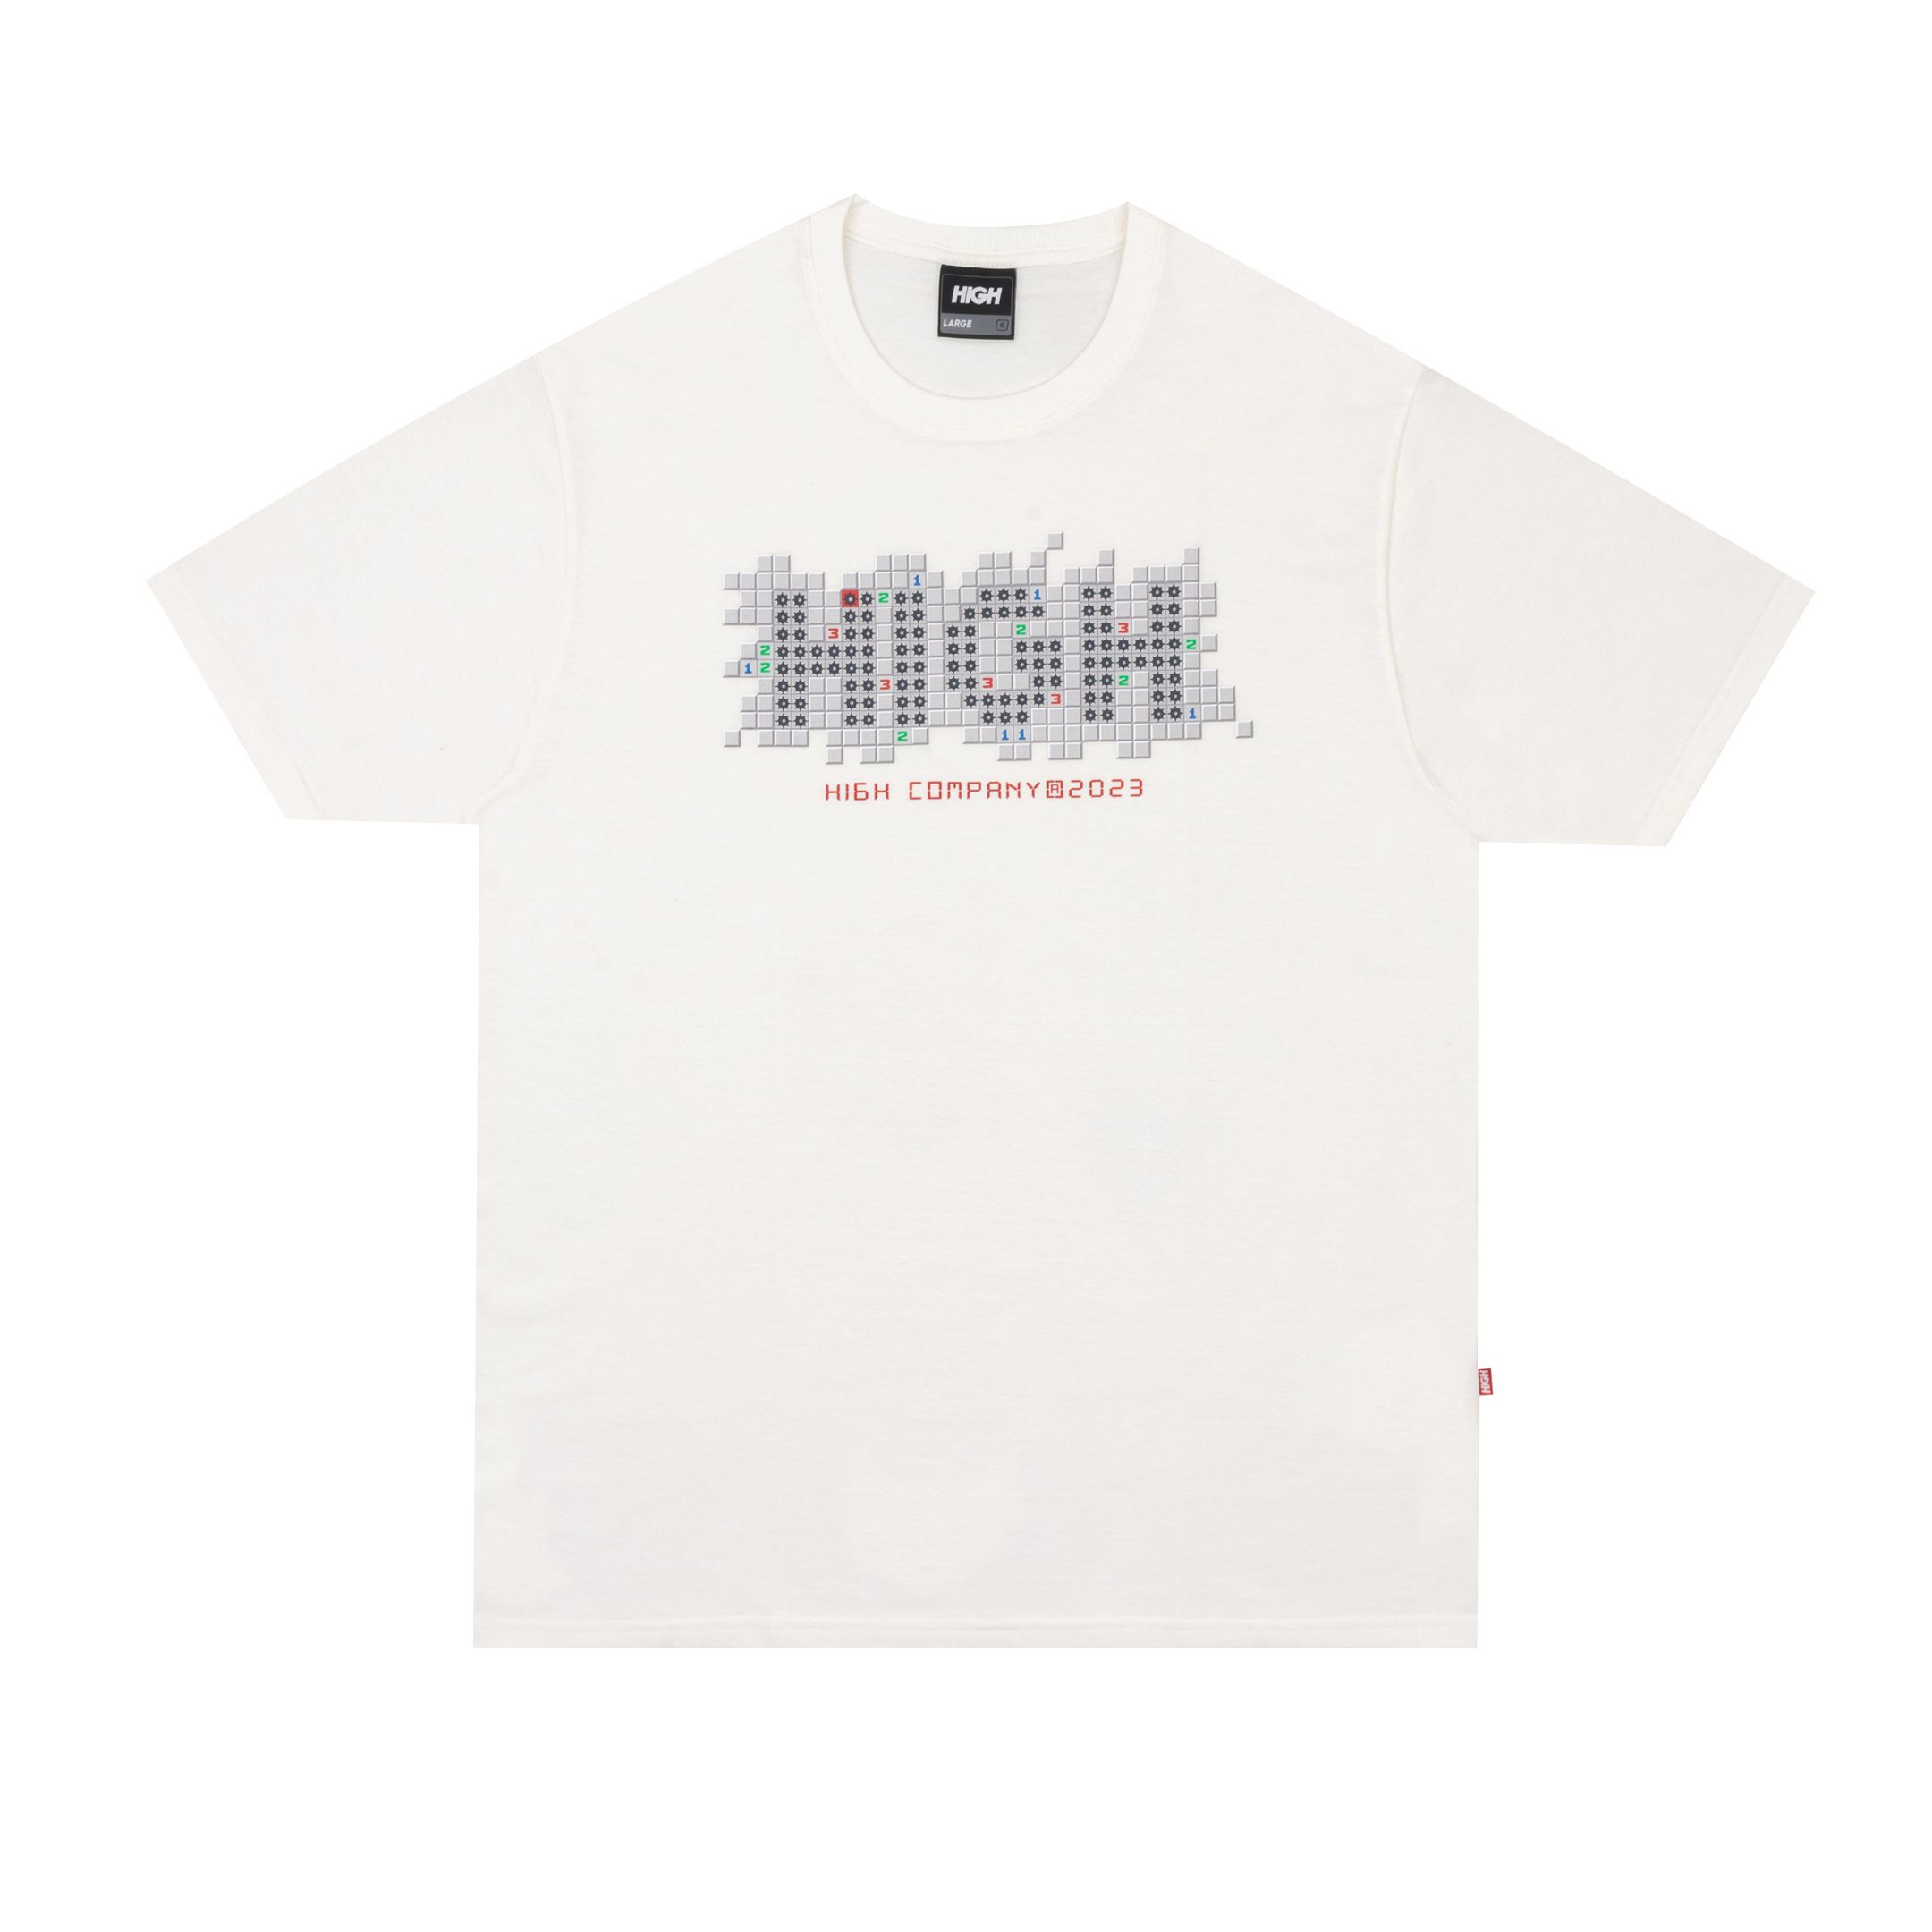 Camiseta High